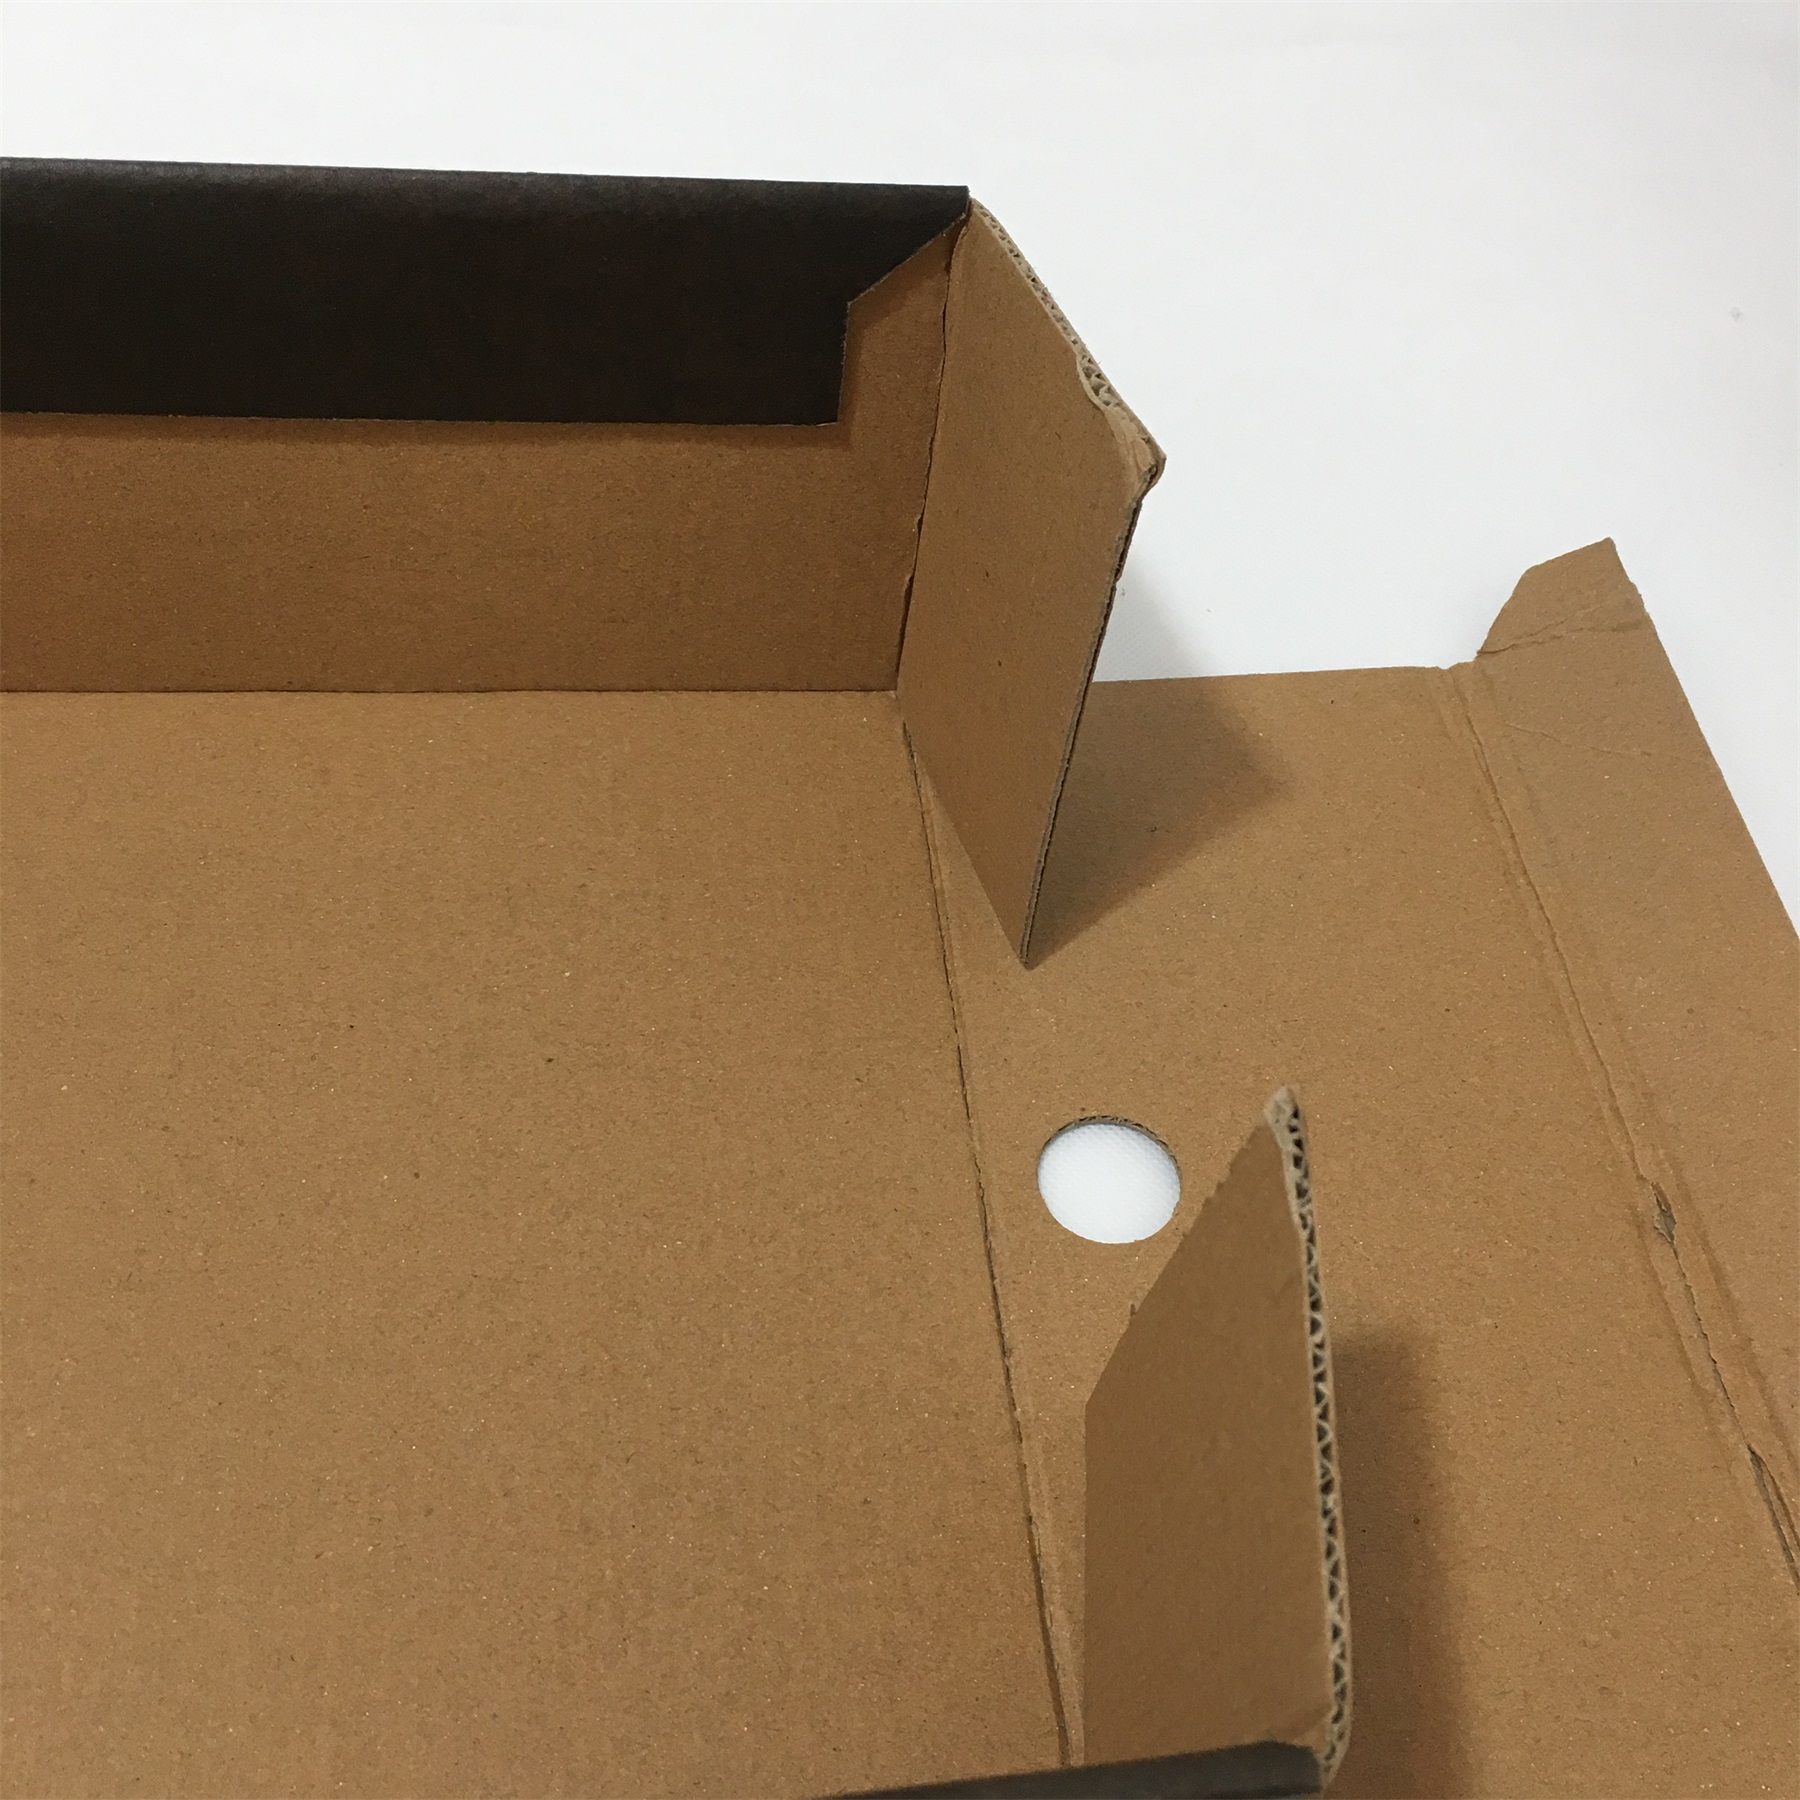 foldable shoe box